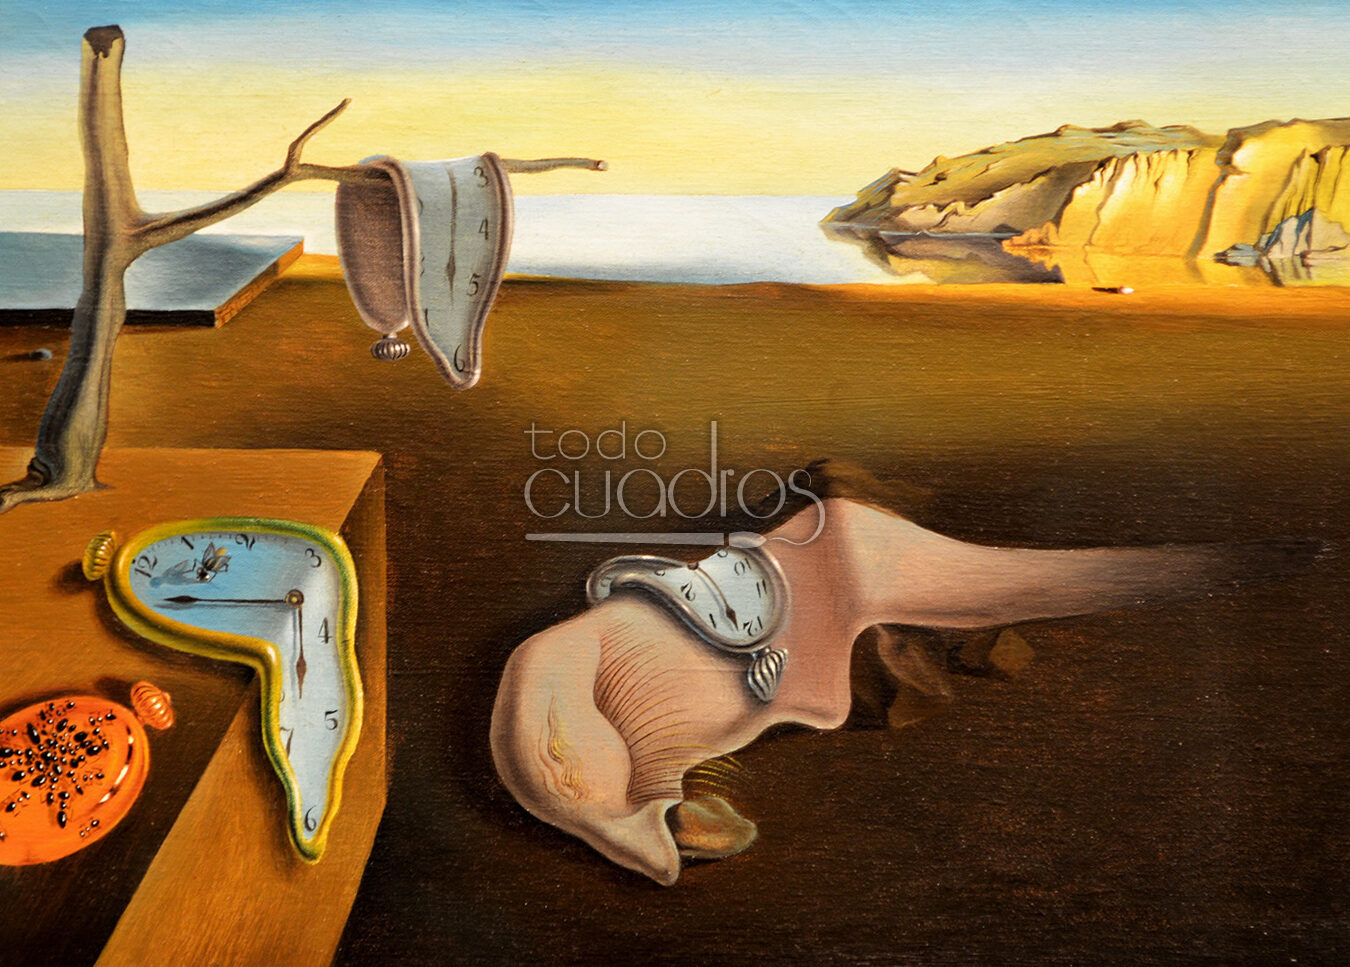 Obras más destacadas de Salvador Dalí